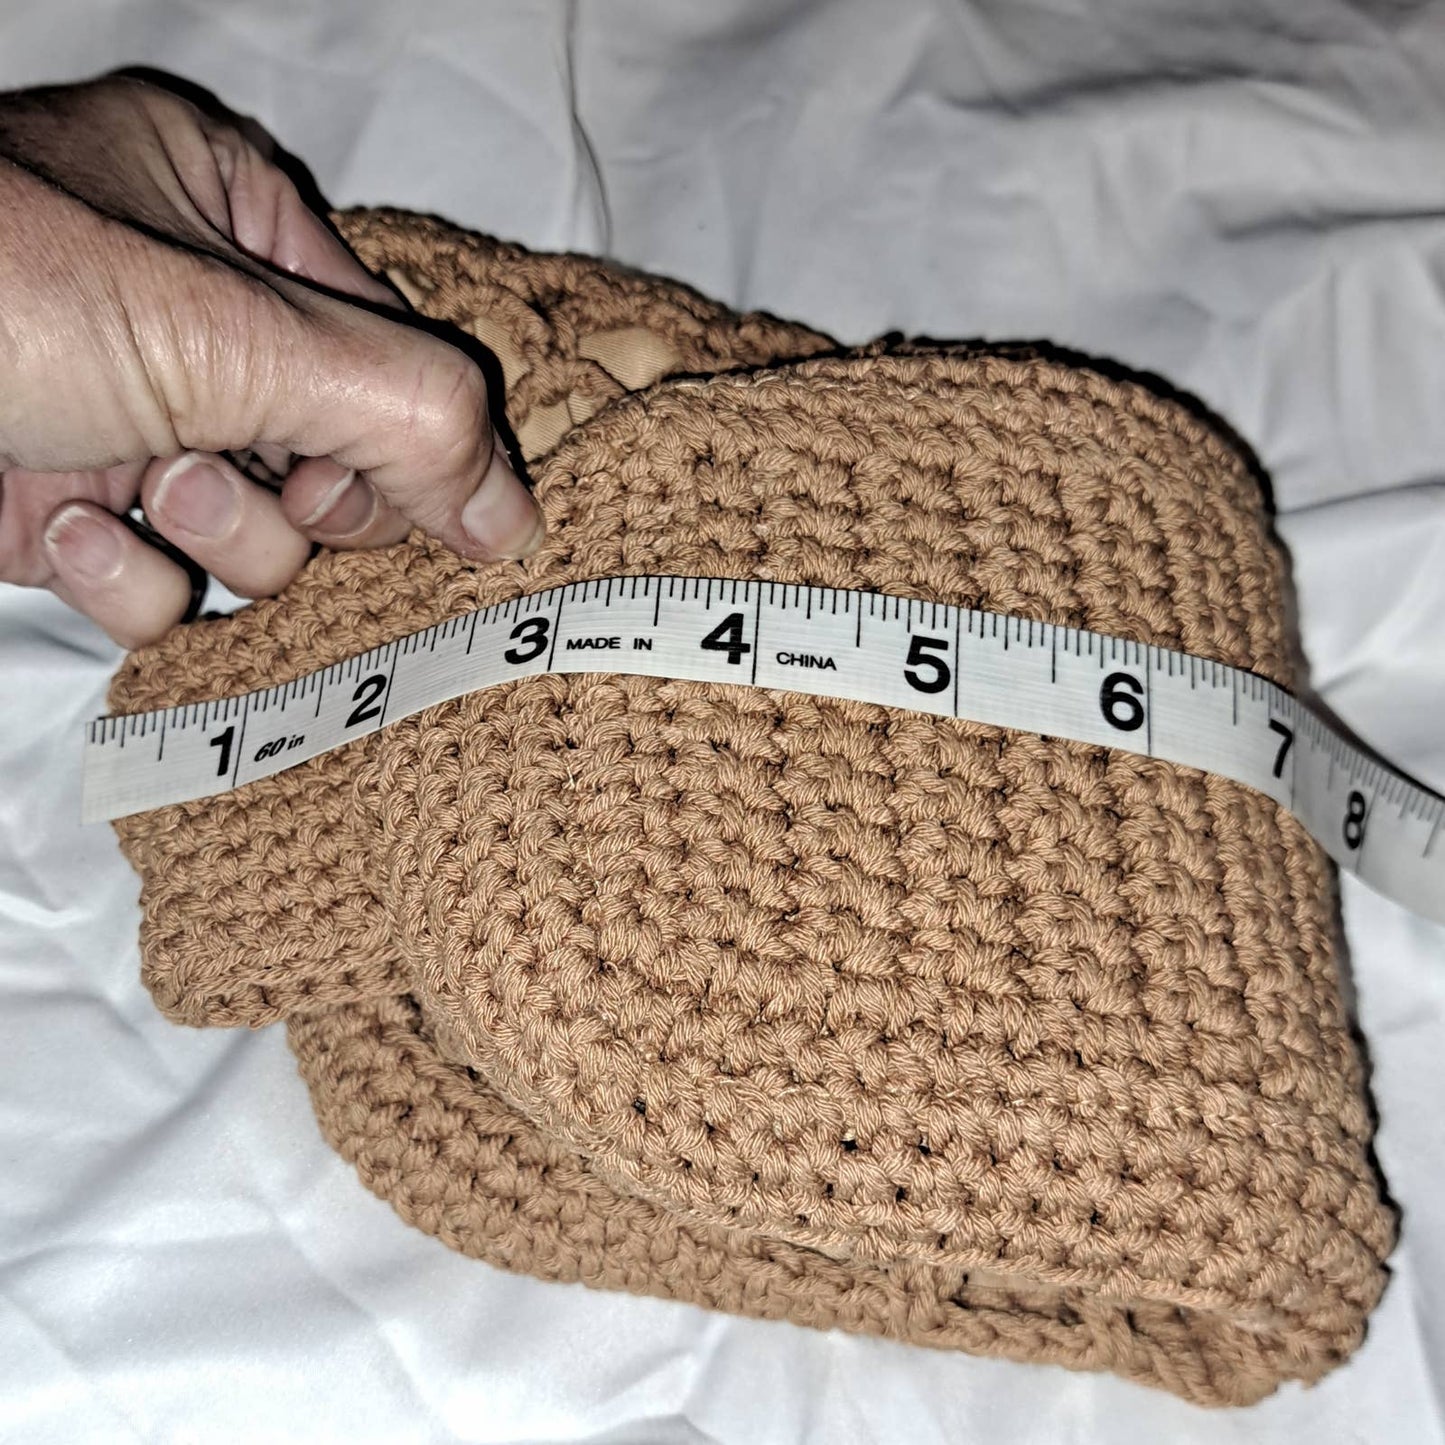 NIB - 10 inch handmade straw woven beach bag purse